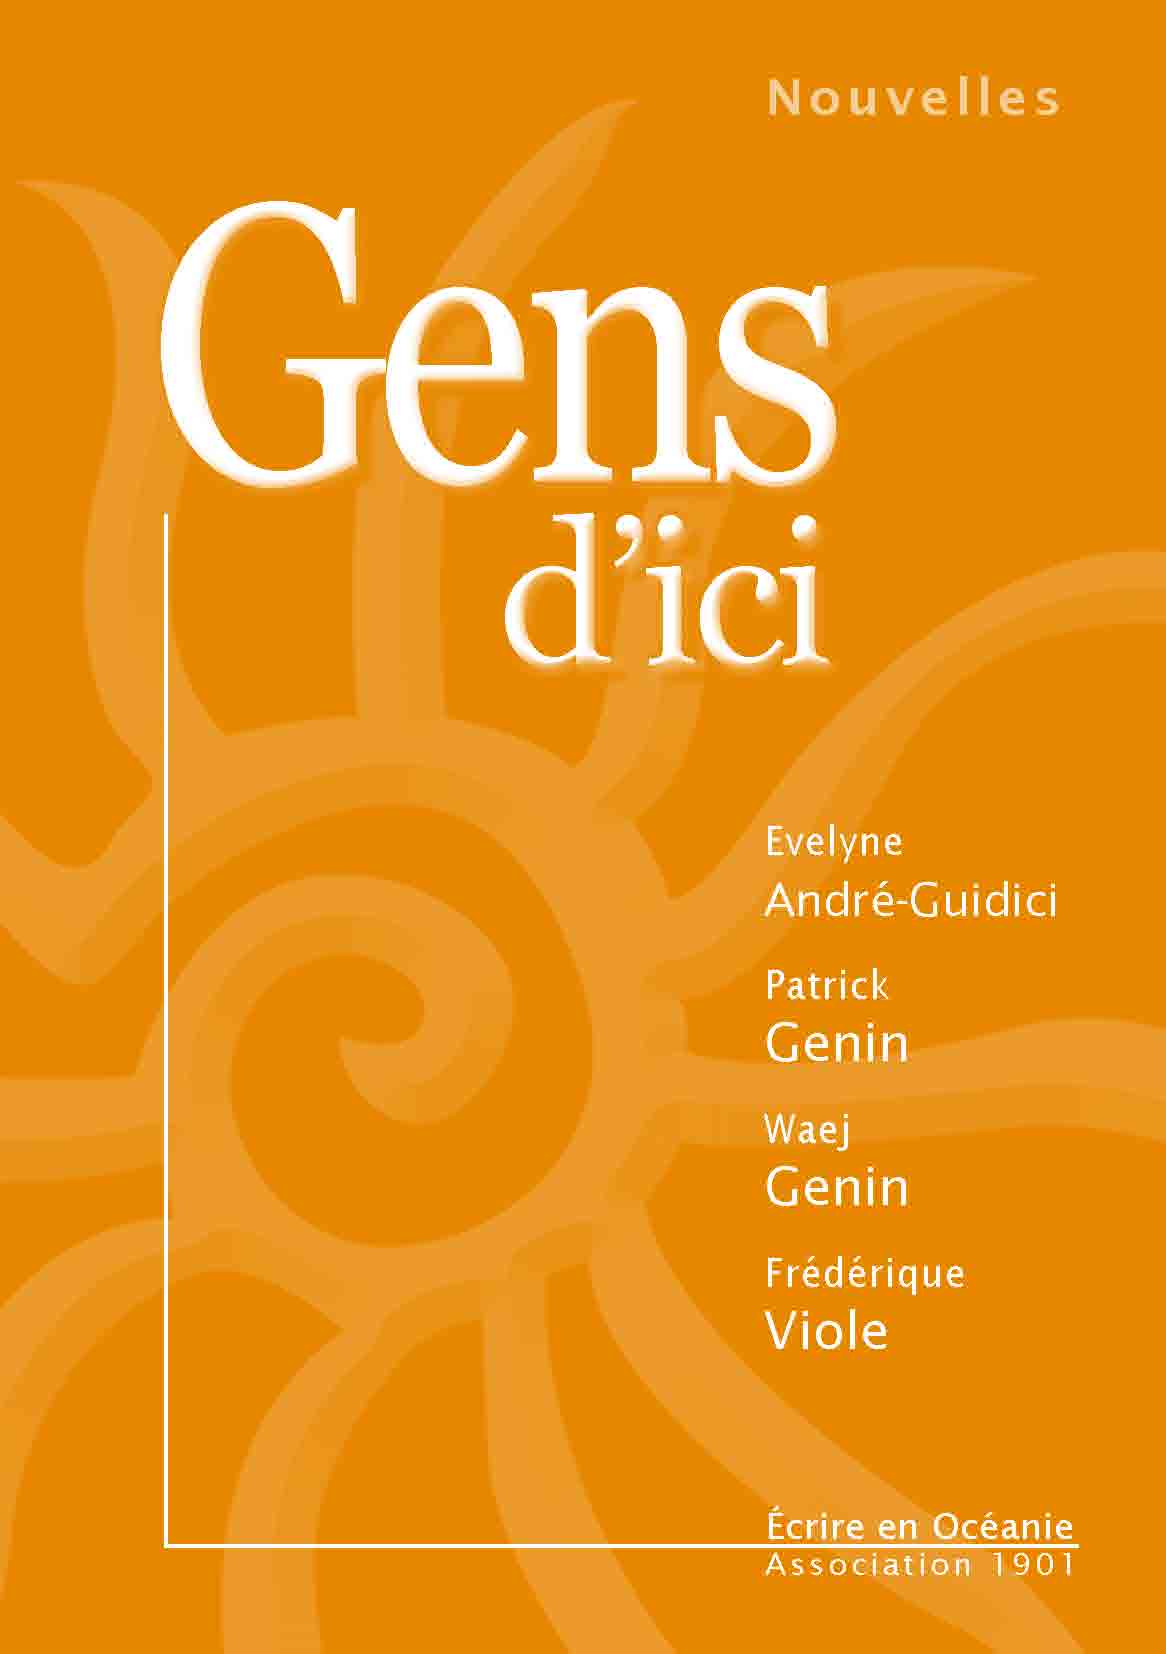 Gens d’ici, Evelyne André-Guidici – Patrick Genin – Waej Genin – Frédérique Viole